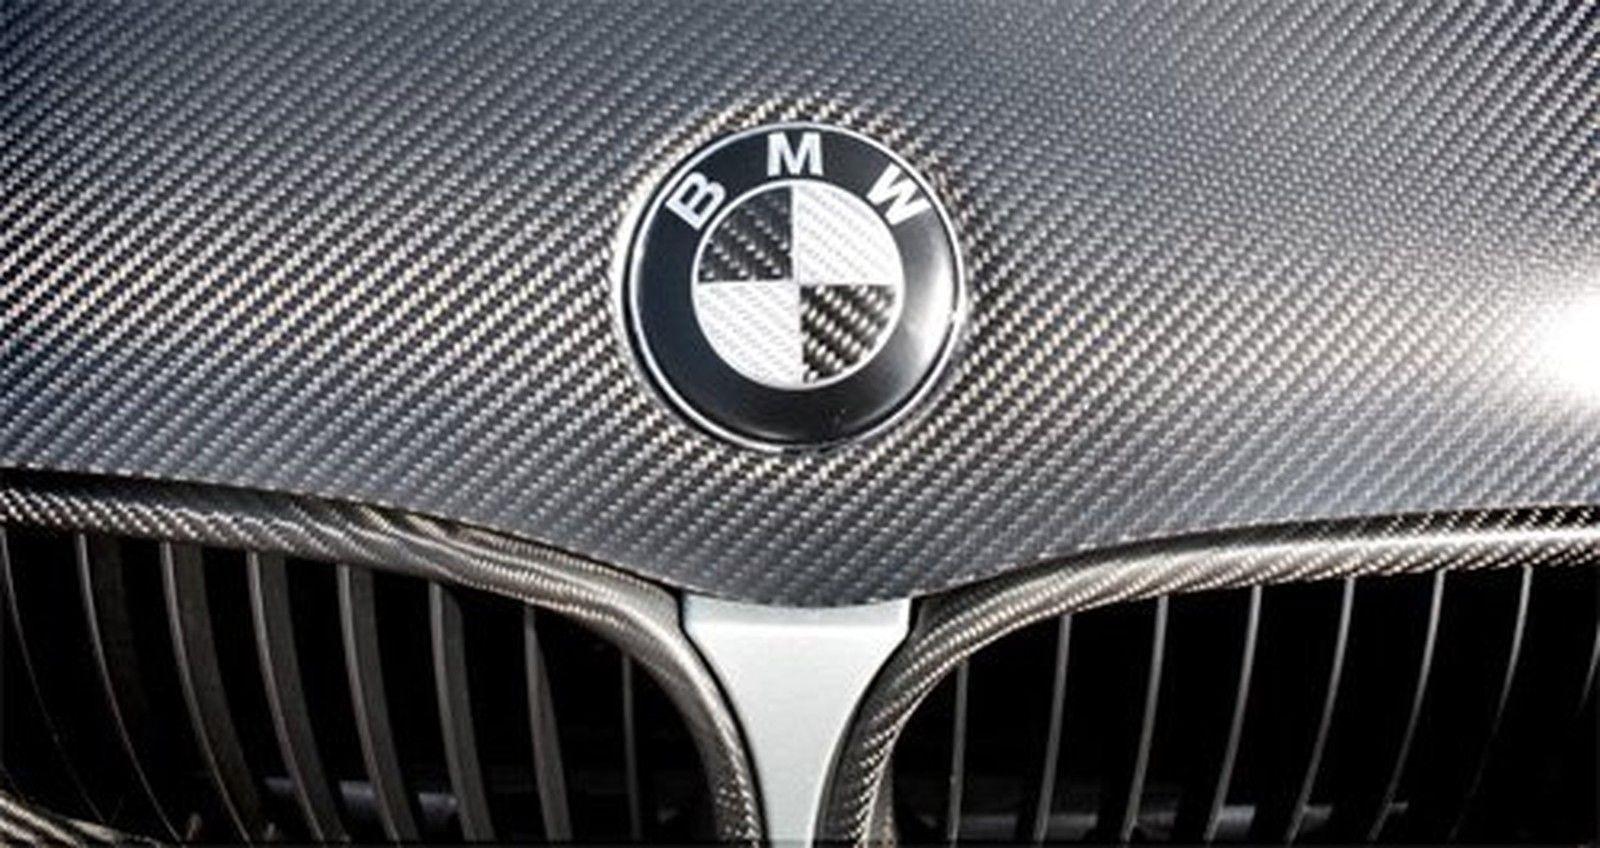 Carbon Fiber BMW Logo - 82mm Carbon Fiber BMW Replacement Hood Emblem